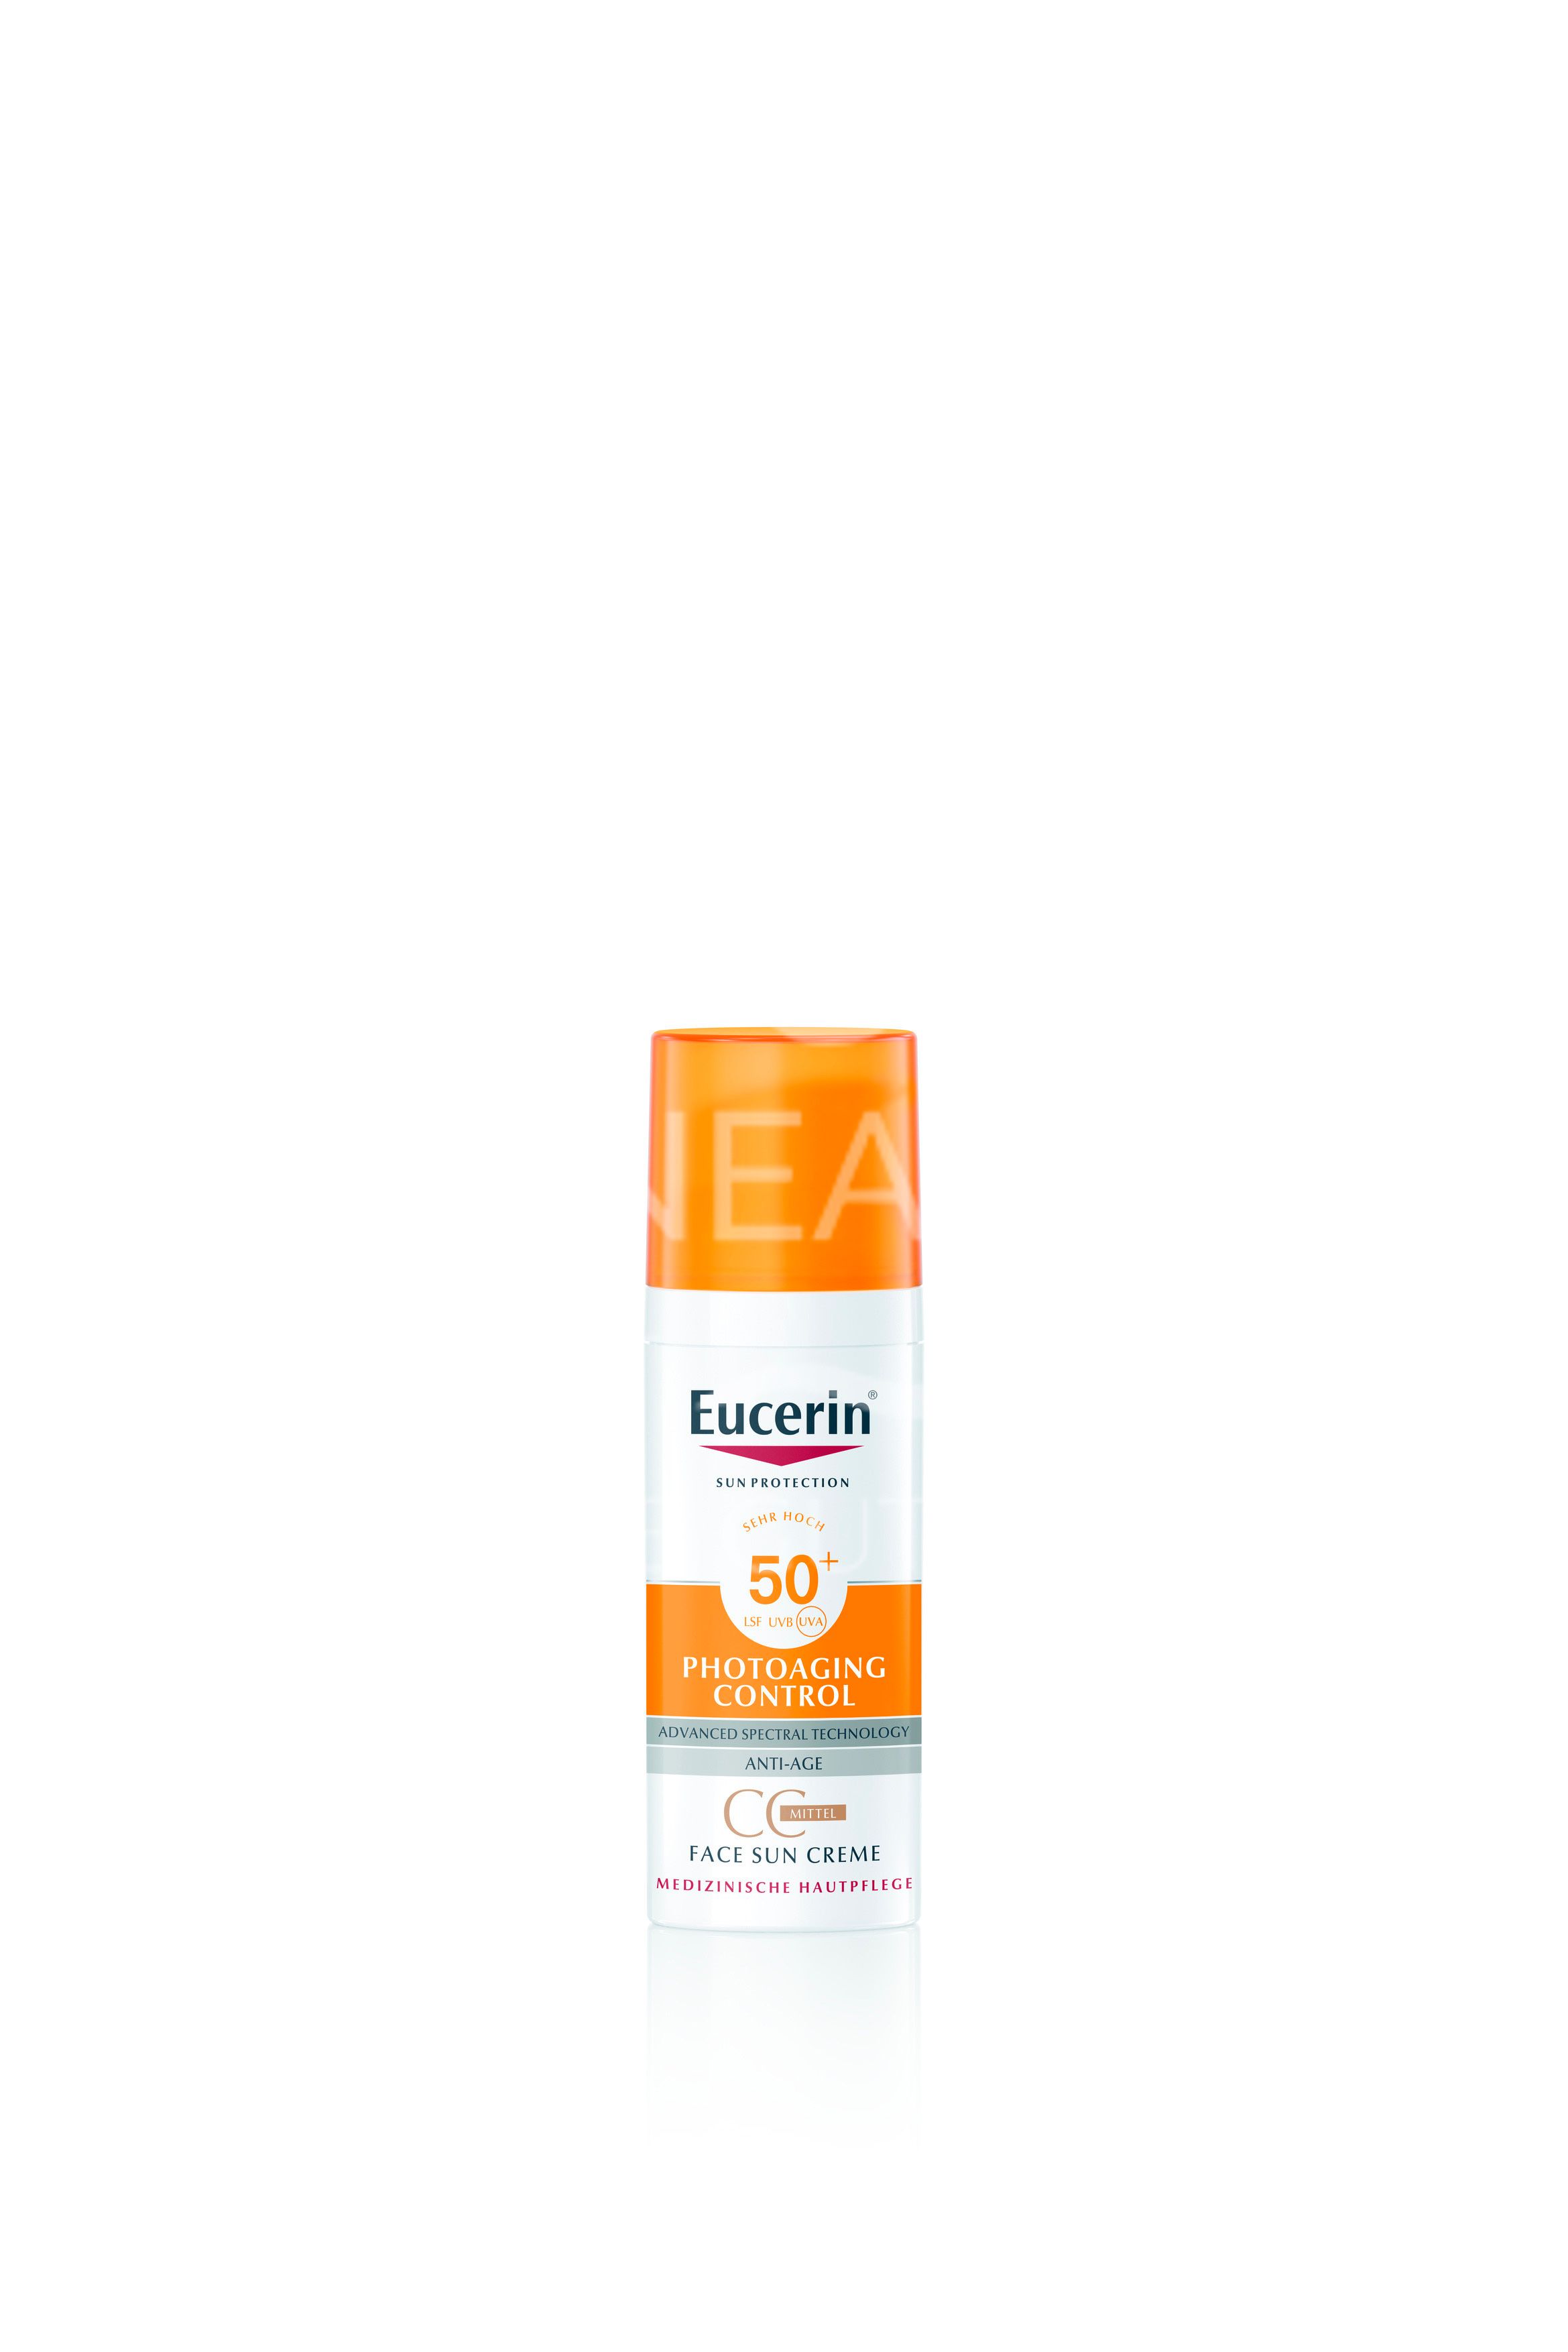 Eucerin® Photoaging Control Face Sun CC Creme getönt mittel LSF 50+